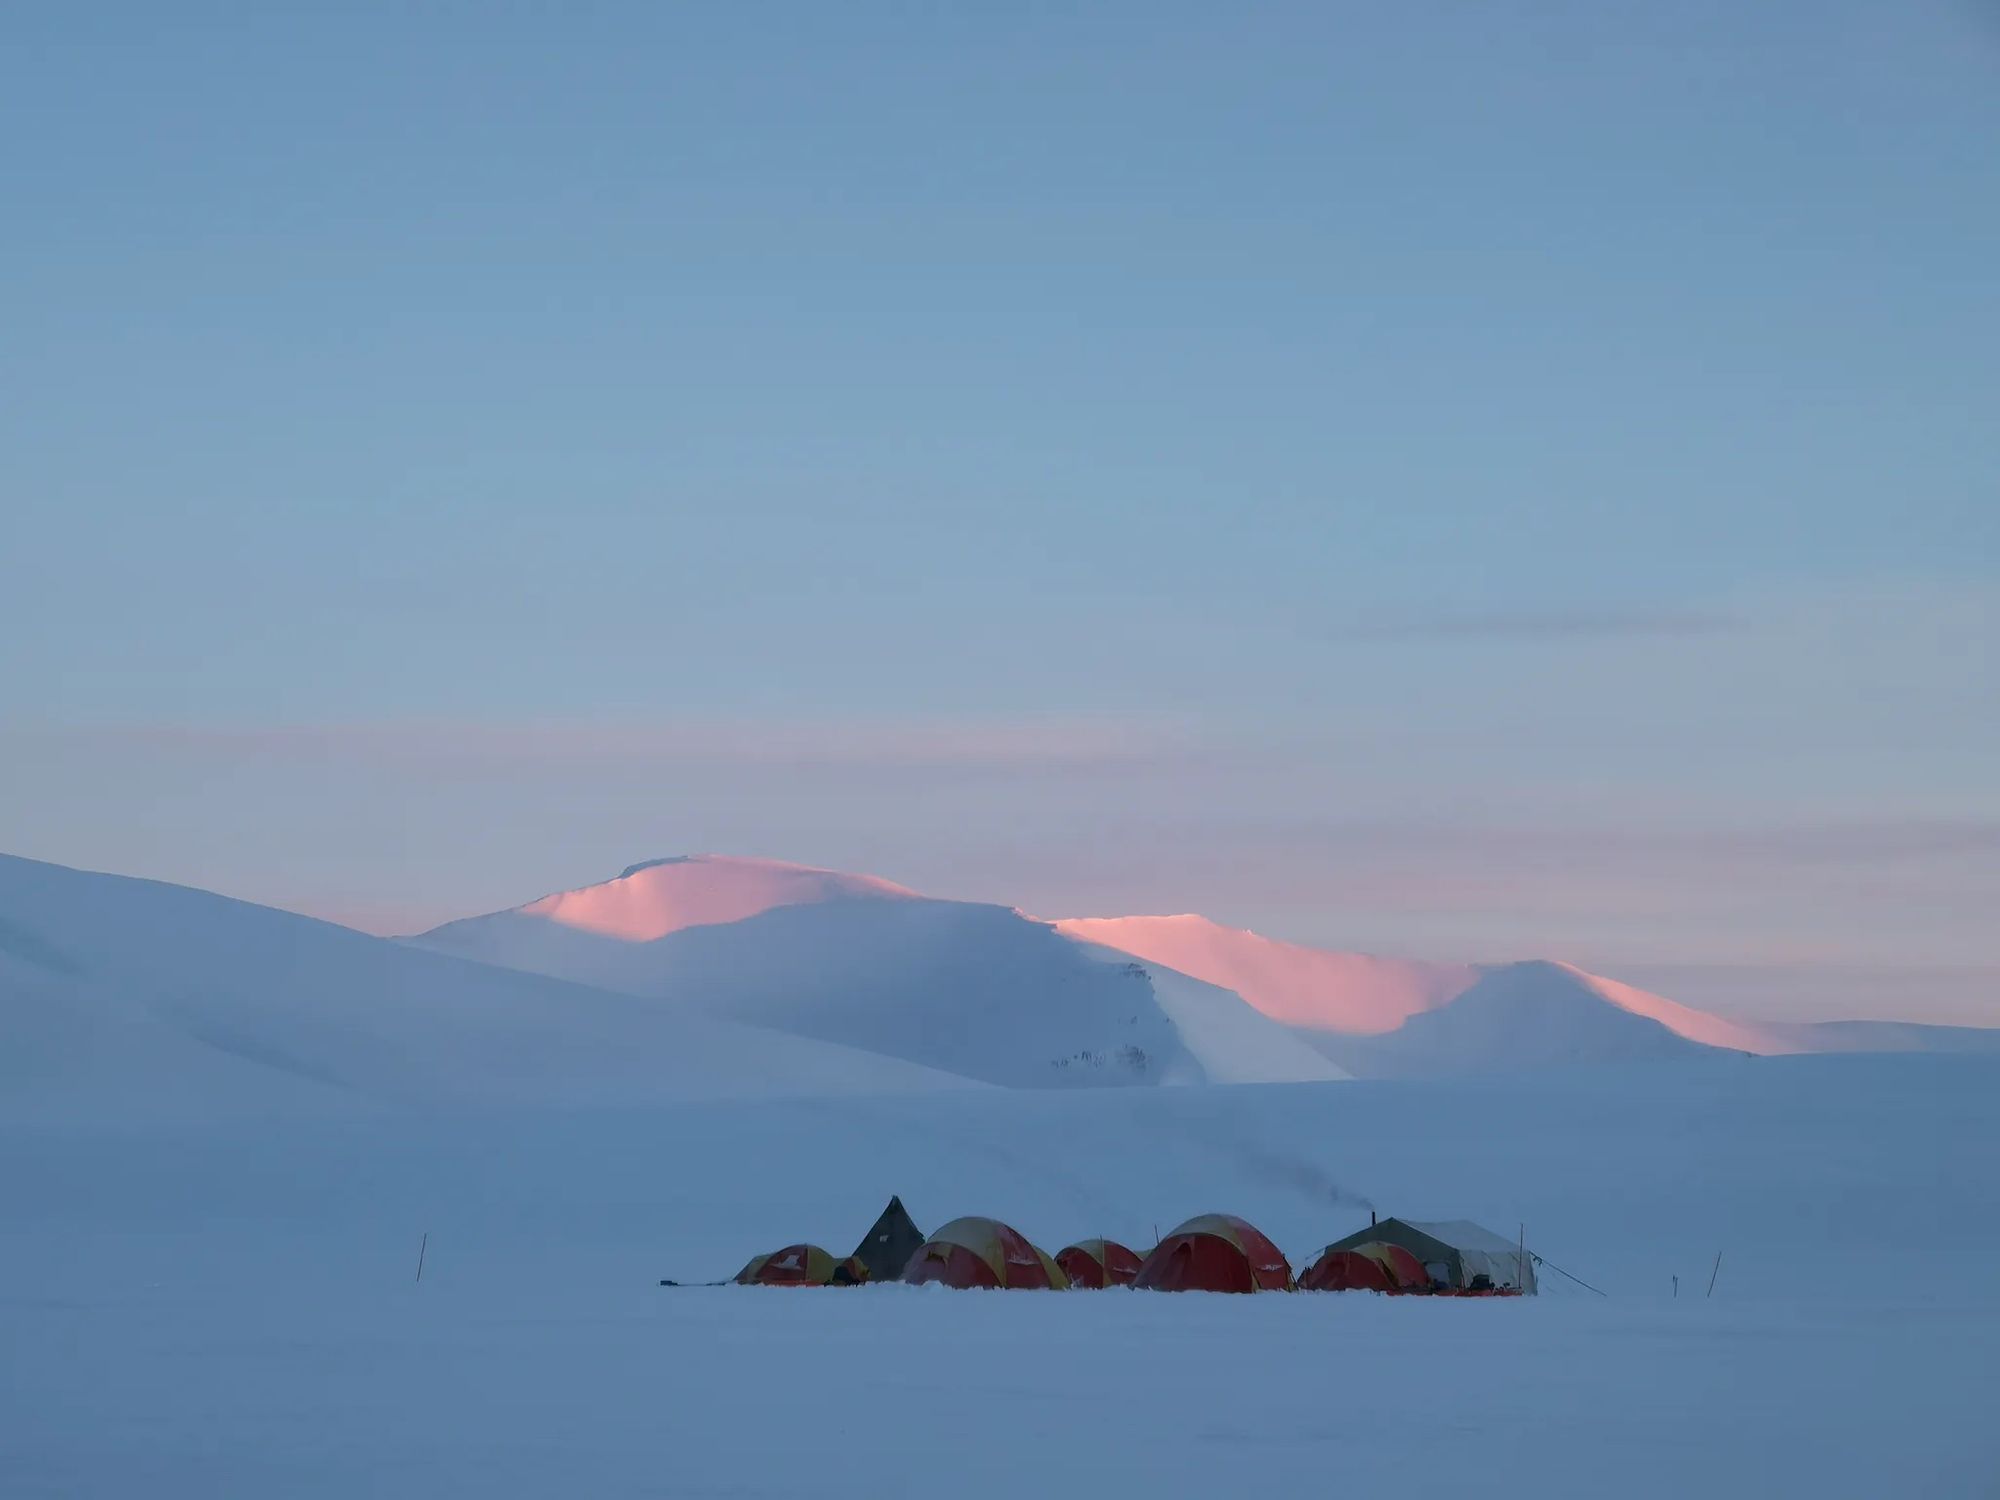 A wilderness campsite in Svalbard, Norway.